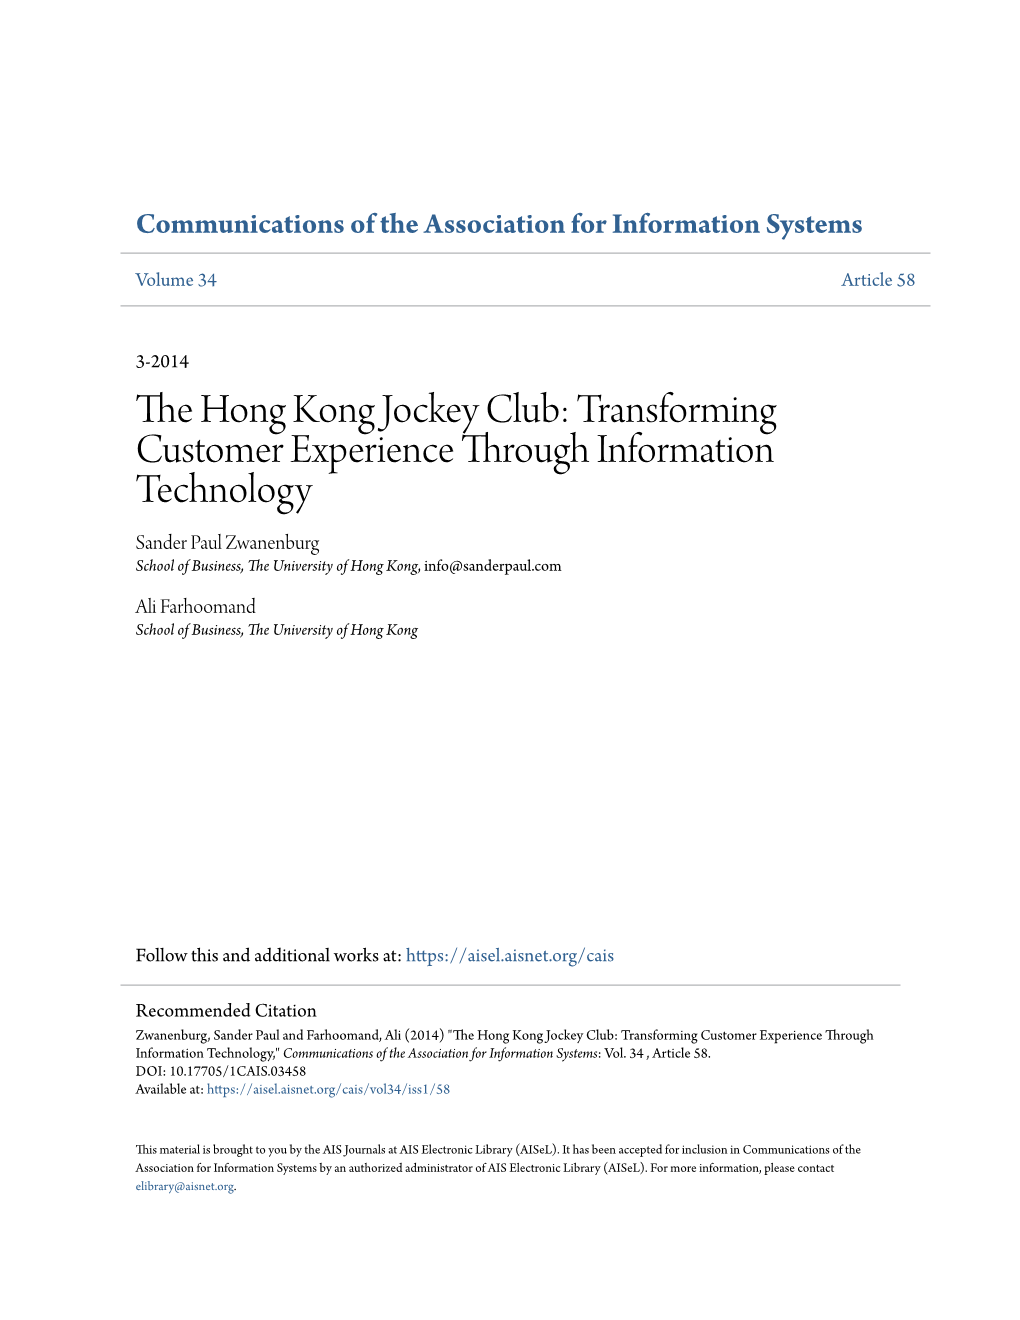 The Hong Kong Jockey Club: Transforming Customer Experience Through Information Technology